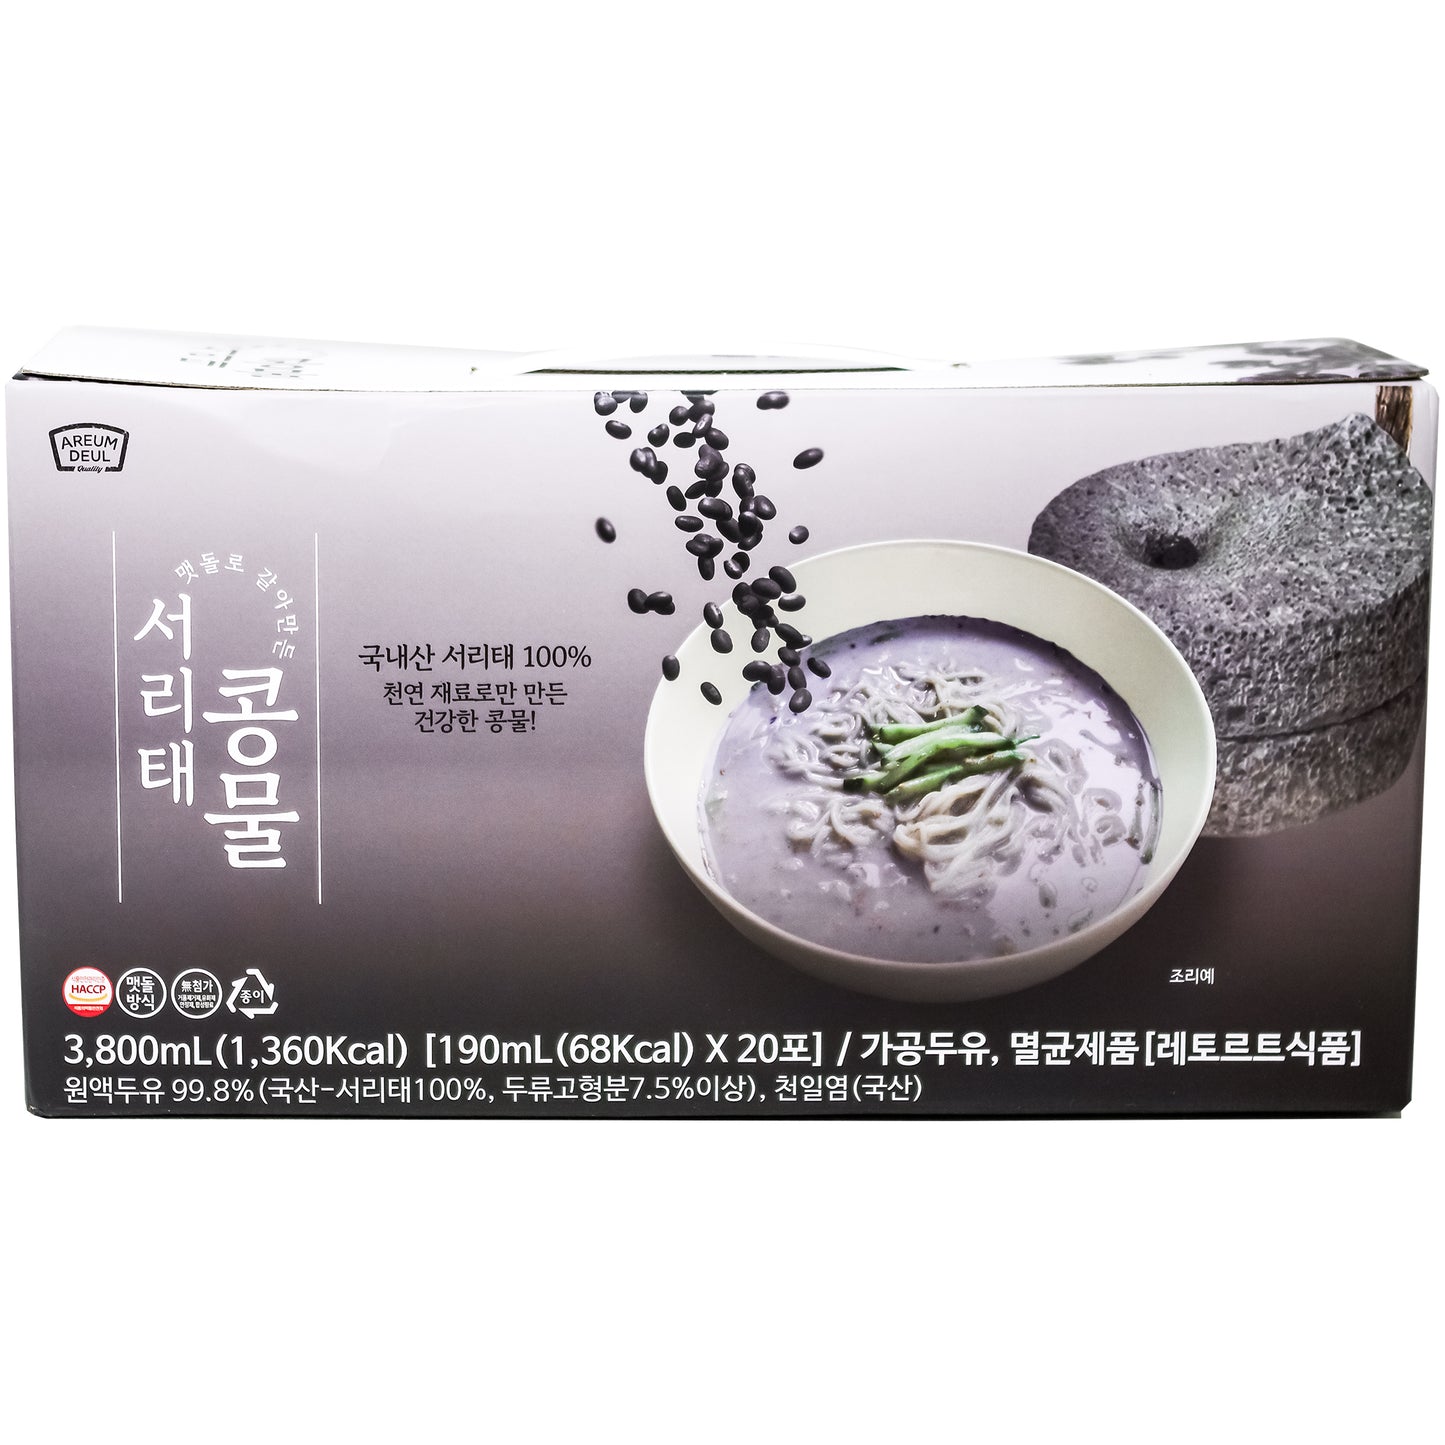 Areumdeul Premium Korean Bean Soup, 6.5 Fl. Ounce (Pack of 20) 아름뜰 맷돌로 갈아만든서리태 콩물